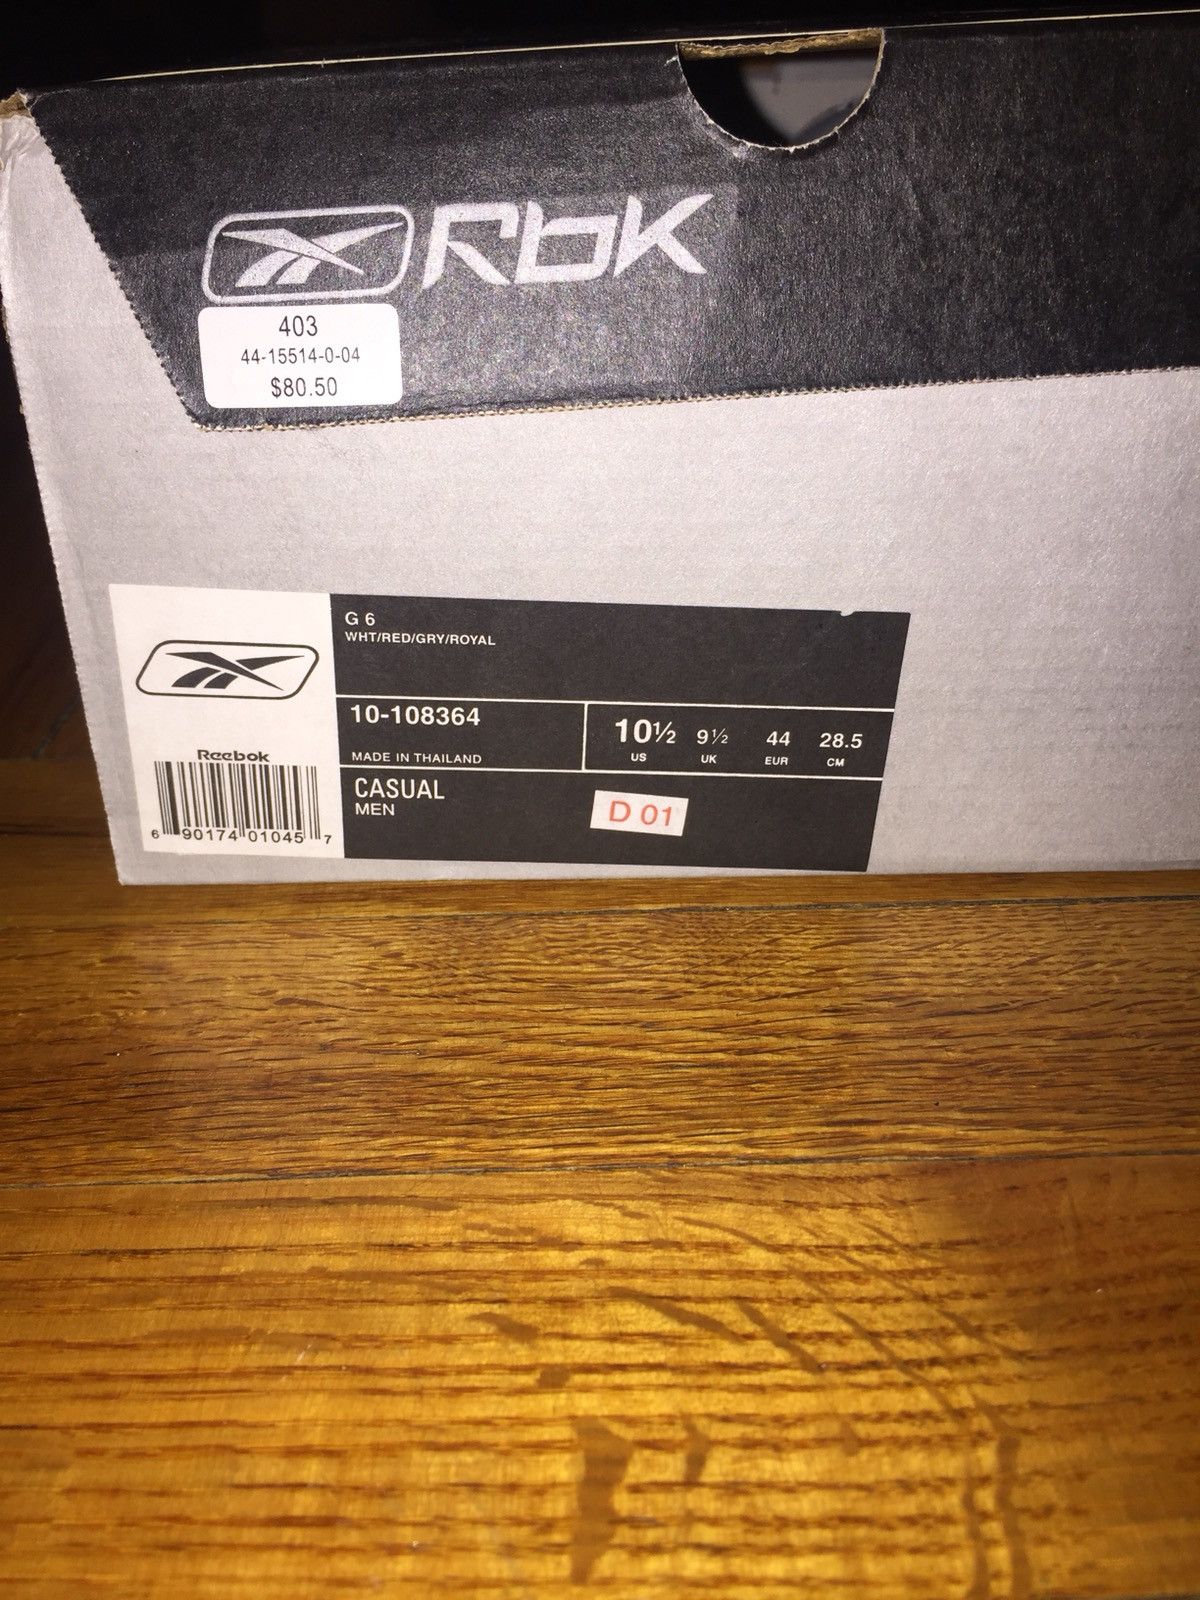 G Unit G Unit Reebok G6 Sneakers Size US 10.5 / EU 43-44 - 8 Preview